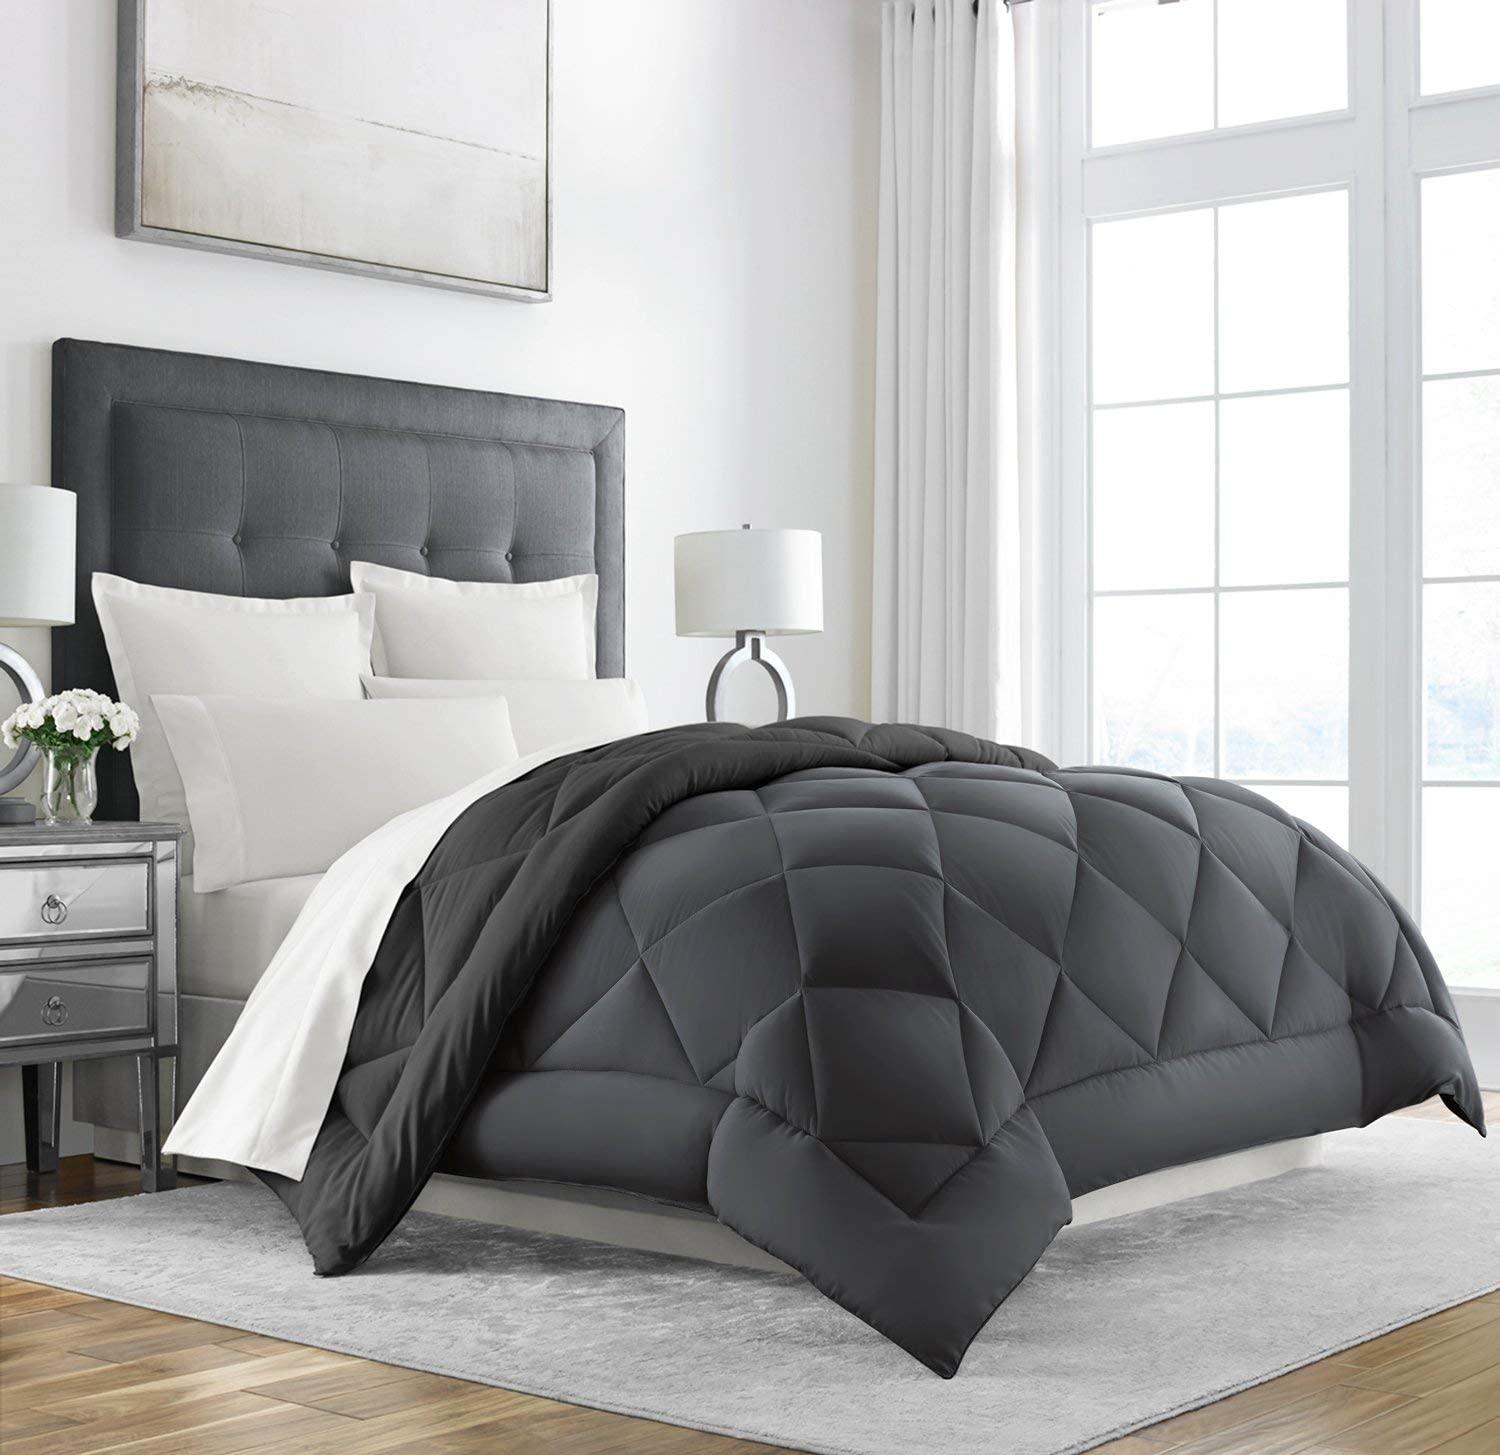 Sleep Restoration King Size Comforter for $37.49 Shipped